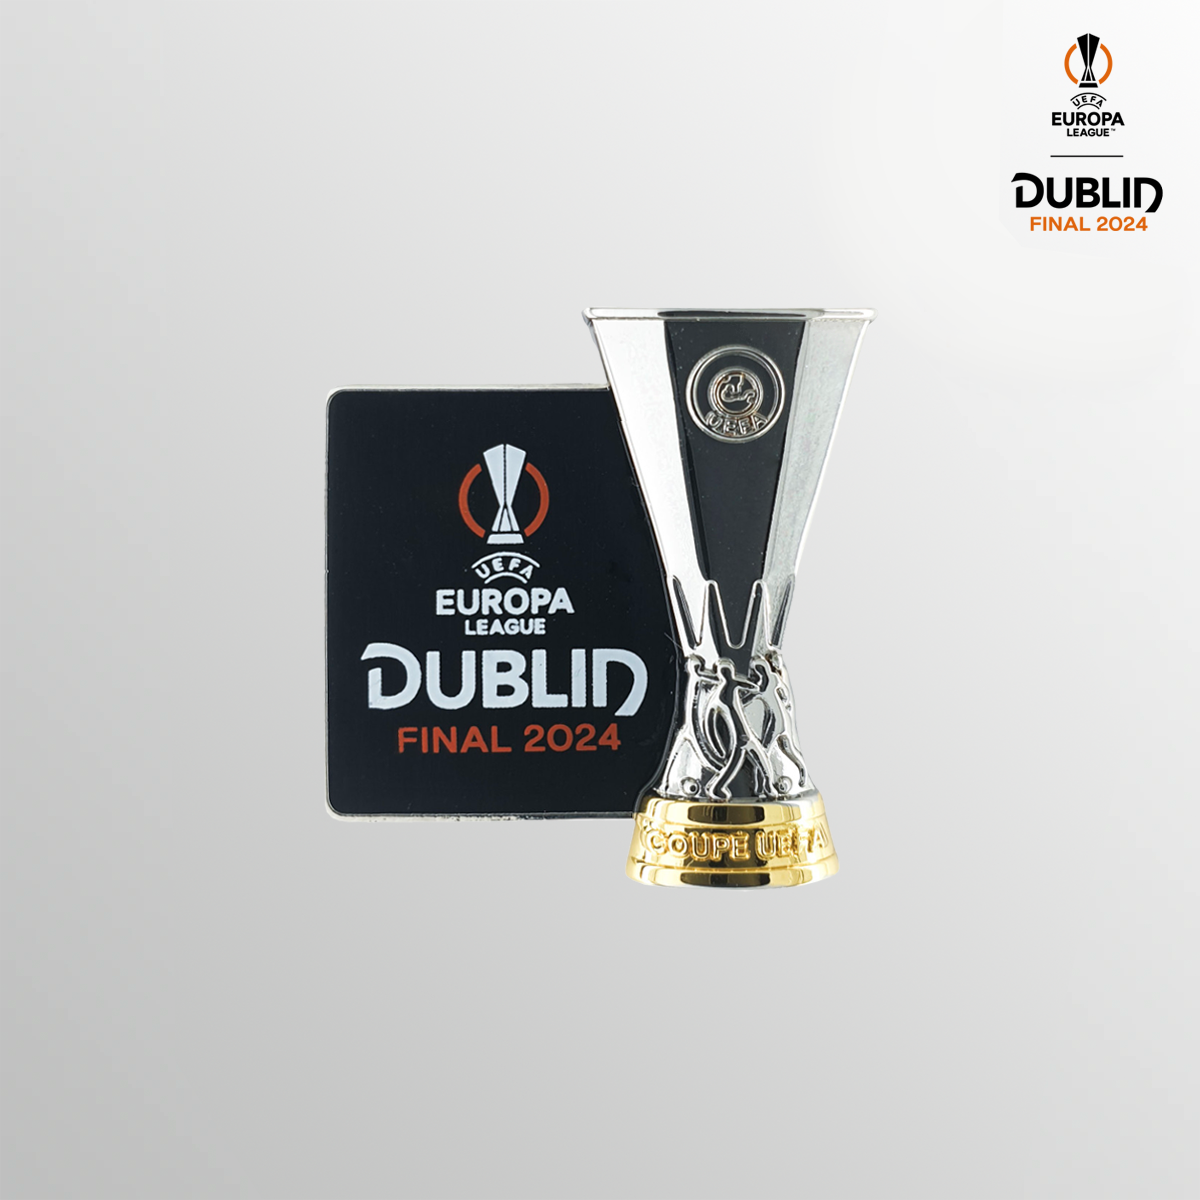 UEFA Europa League Dublin Final 2024 Pin Badge